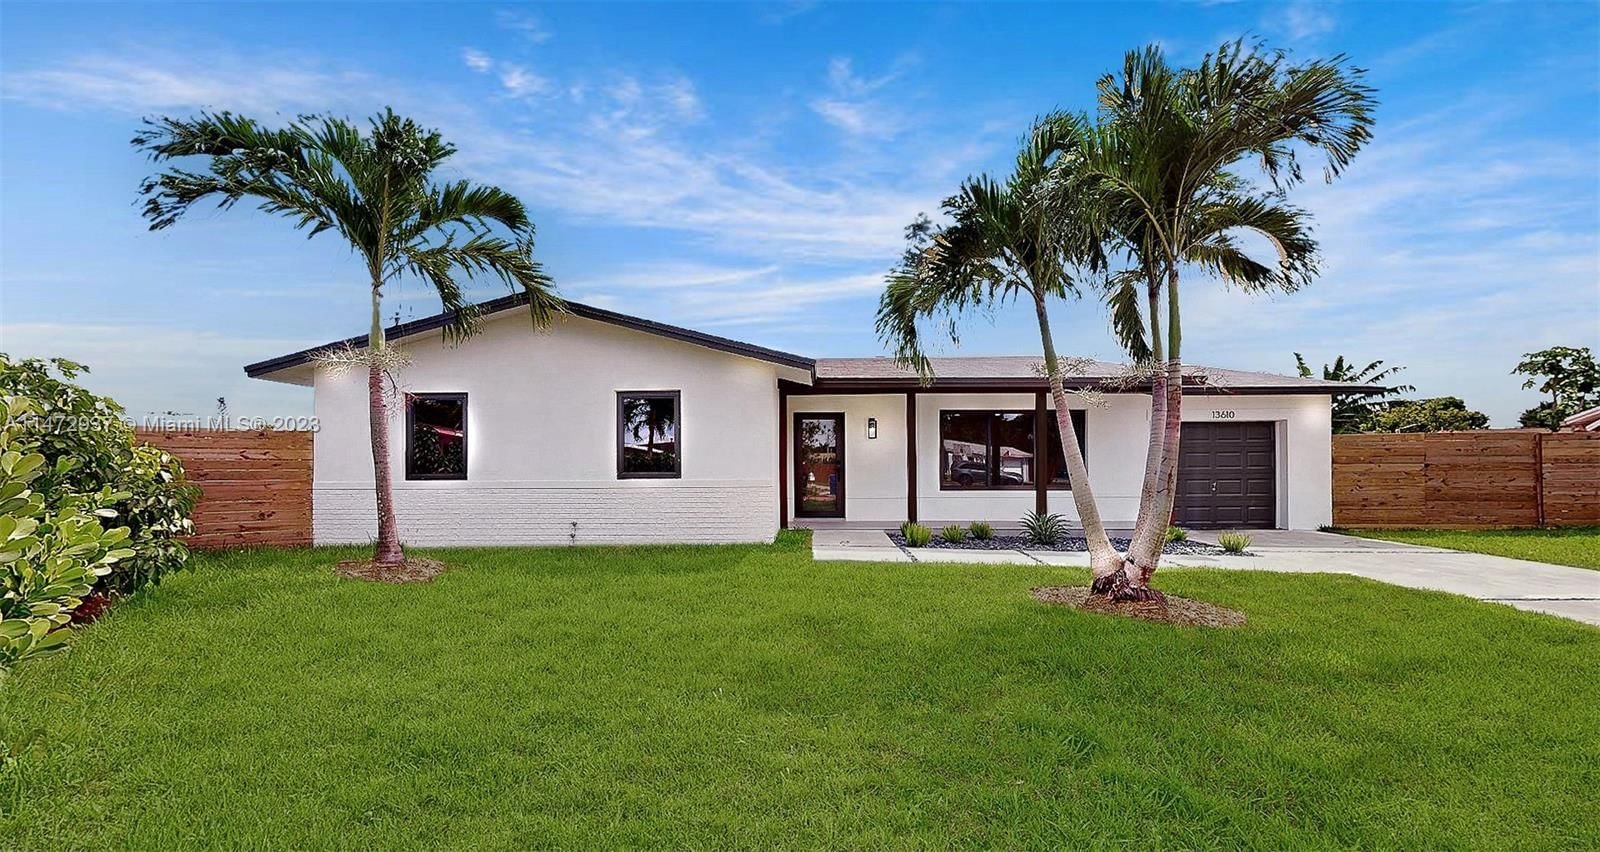 Real estate property located at 13610 73rd St, Miami-Dade County, WINSTON PARK UNIT 5, Miami, FL